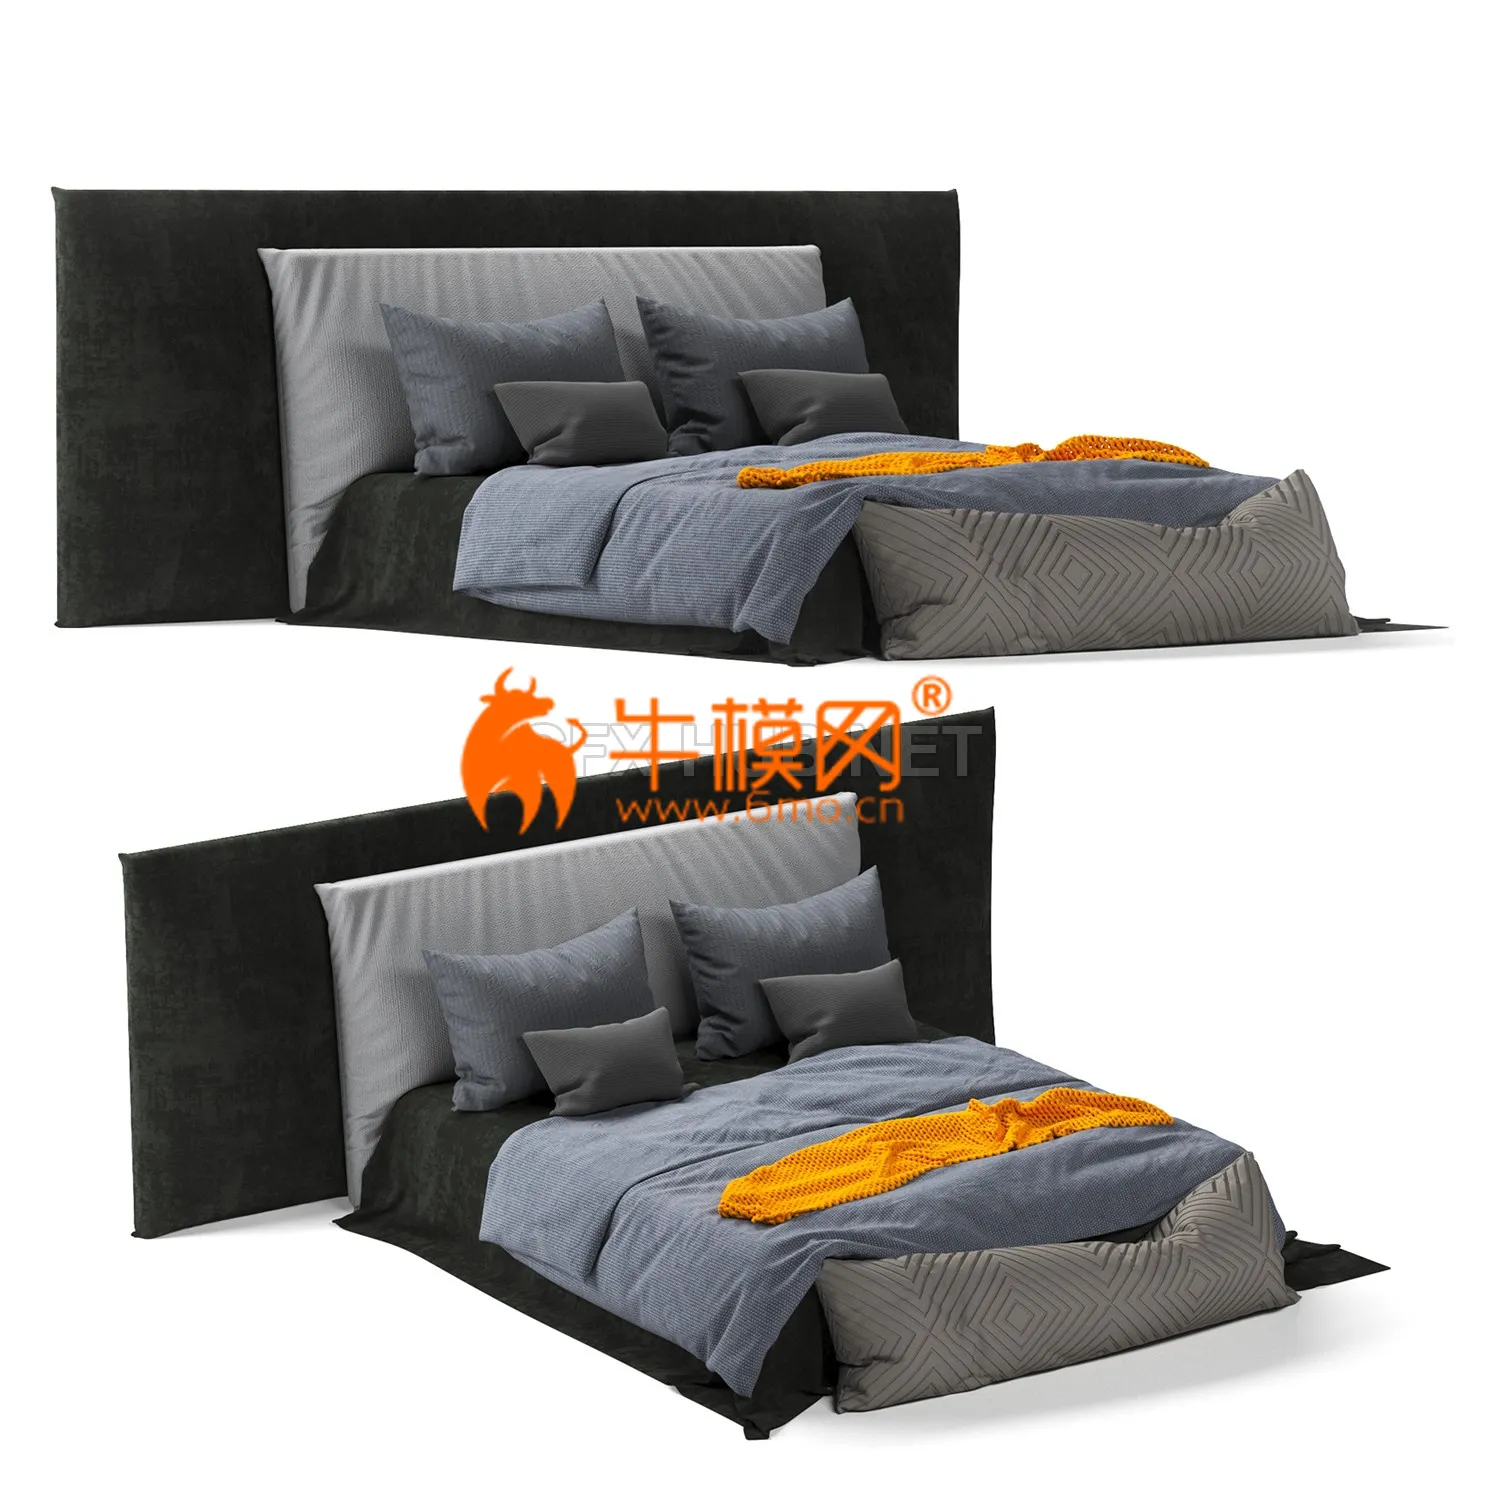 Boho Style Bed By Ahadesign – 3694